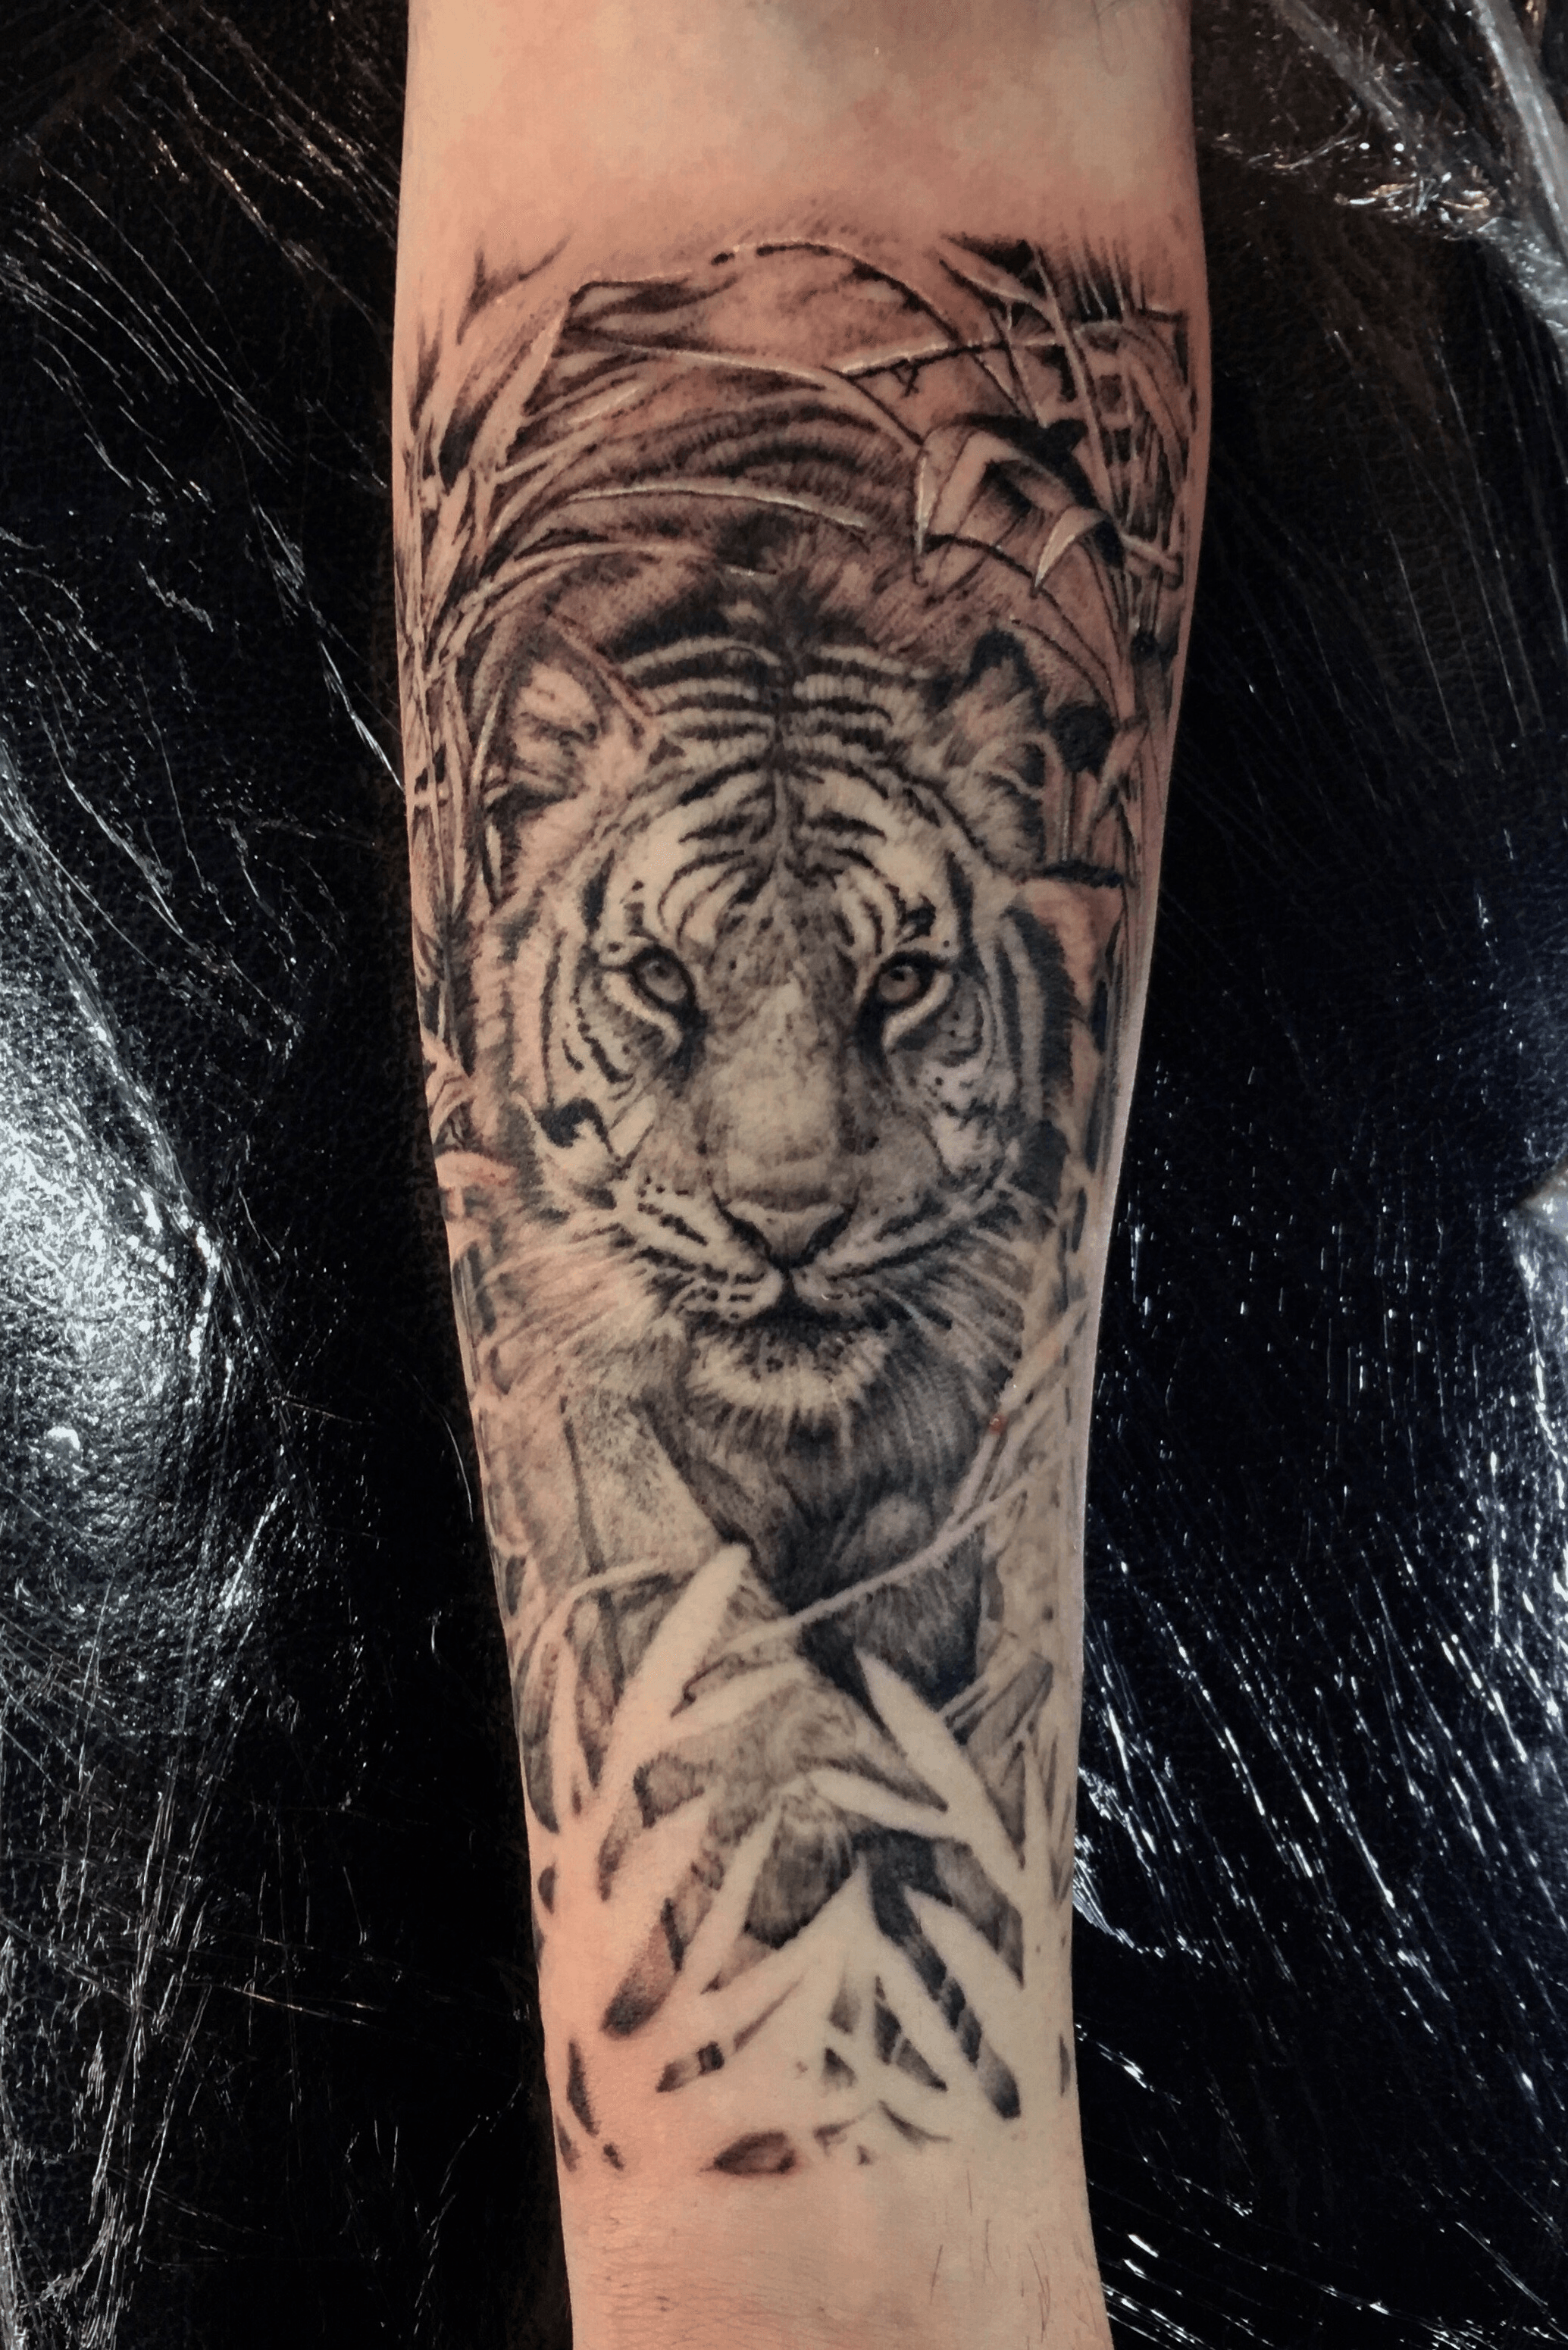 Black Tiger Forearm Temporary Tattoos For Men Adult Women Pirate Ship Skull  Flower Lion Fake Tattoo Waterproof Half Sleeve Tatoo - AliExpress